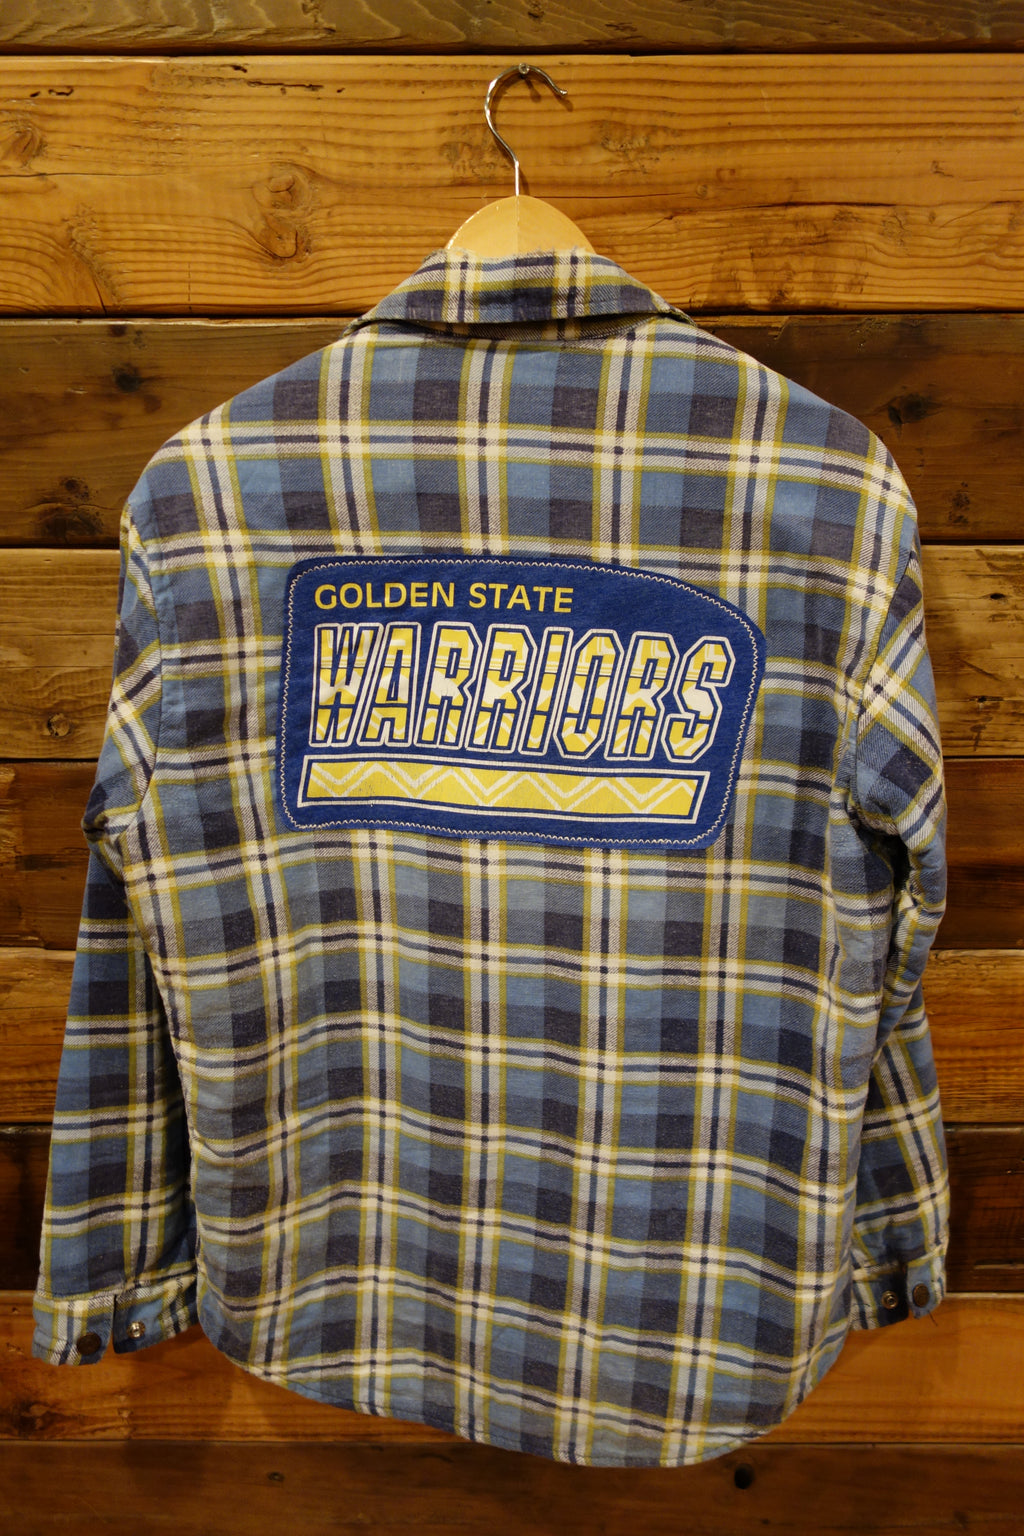 Vintage one of a kind flannel shirt jacket, Golden State Warriors, NBA